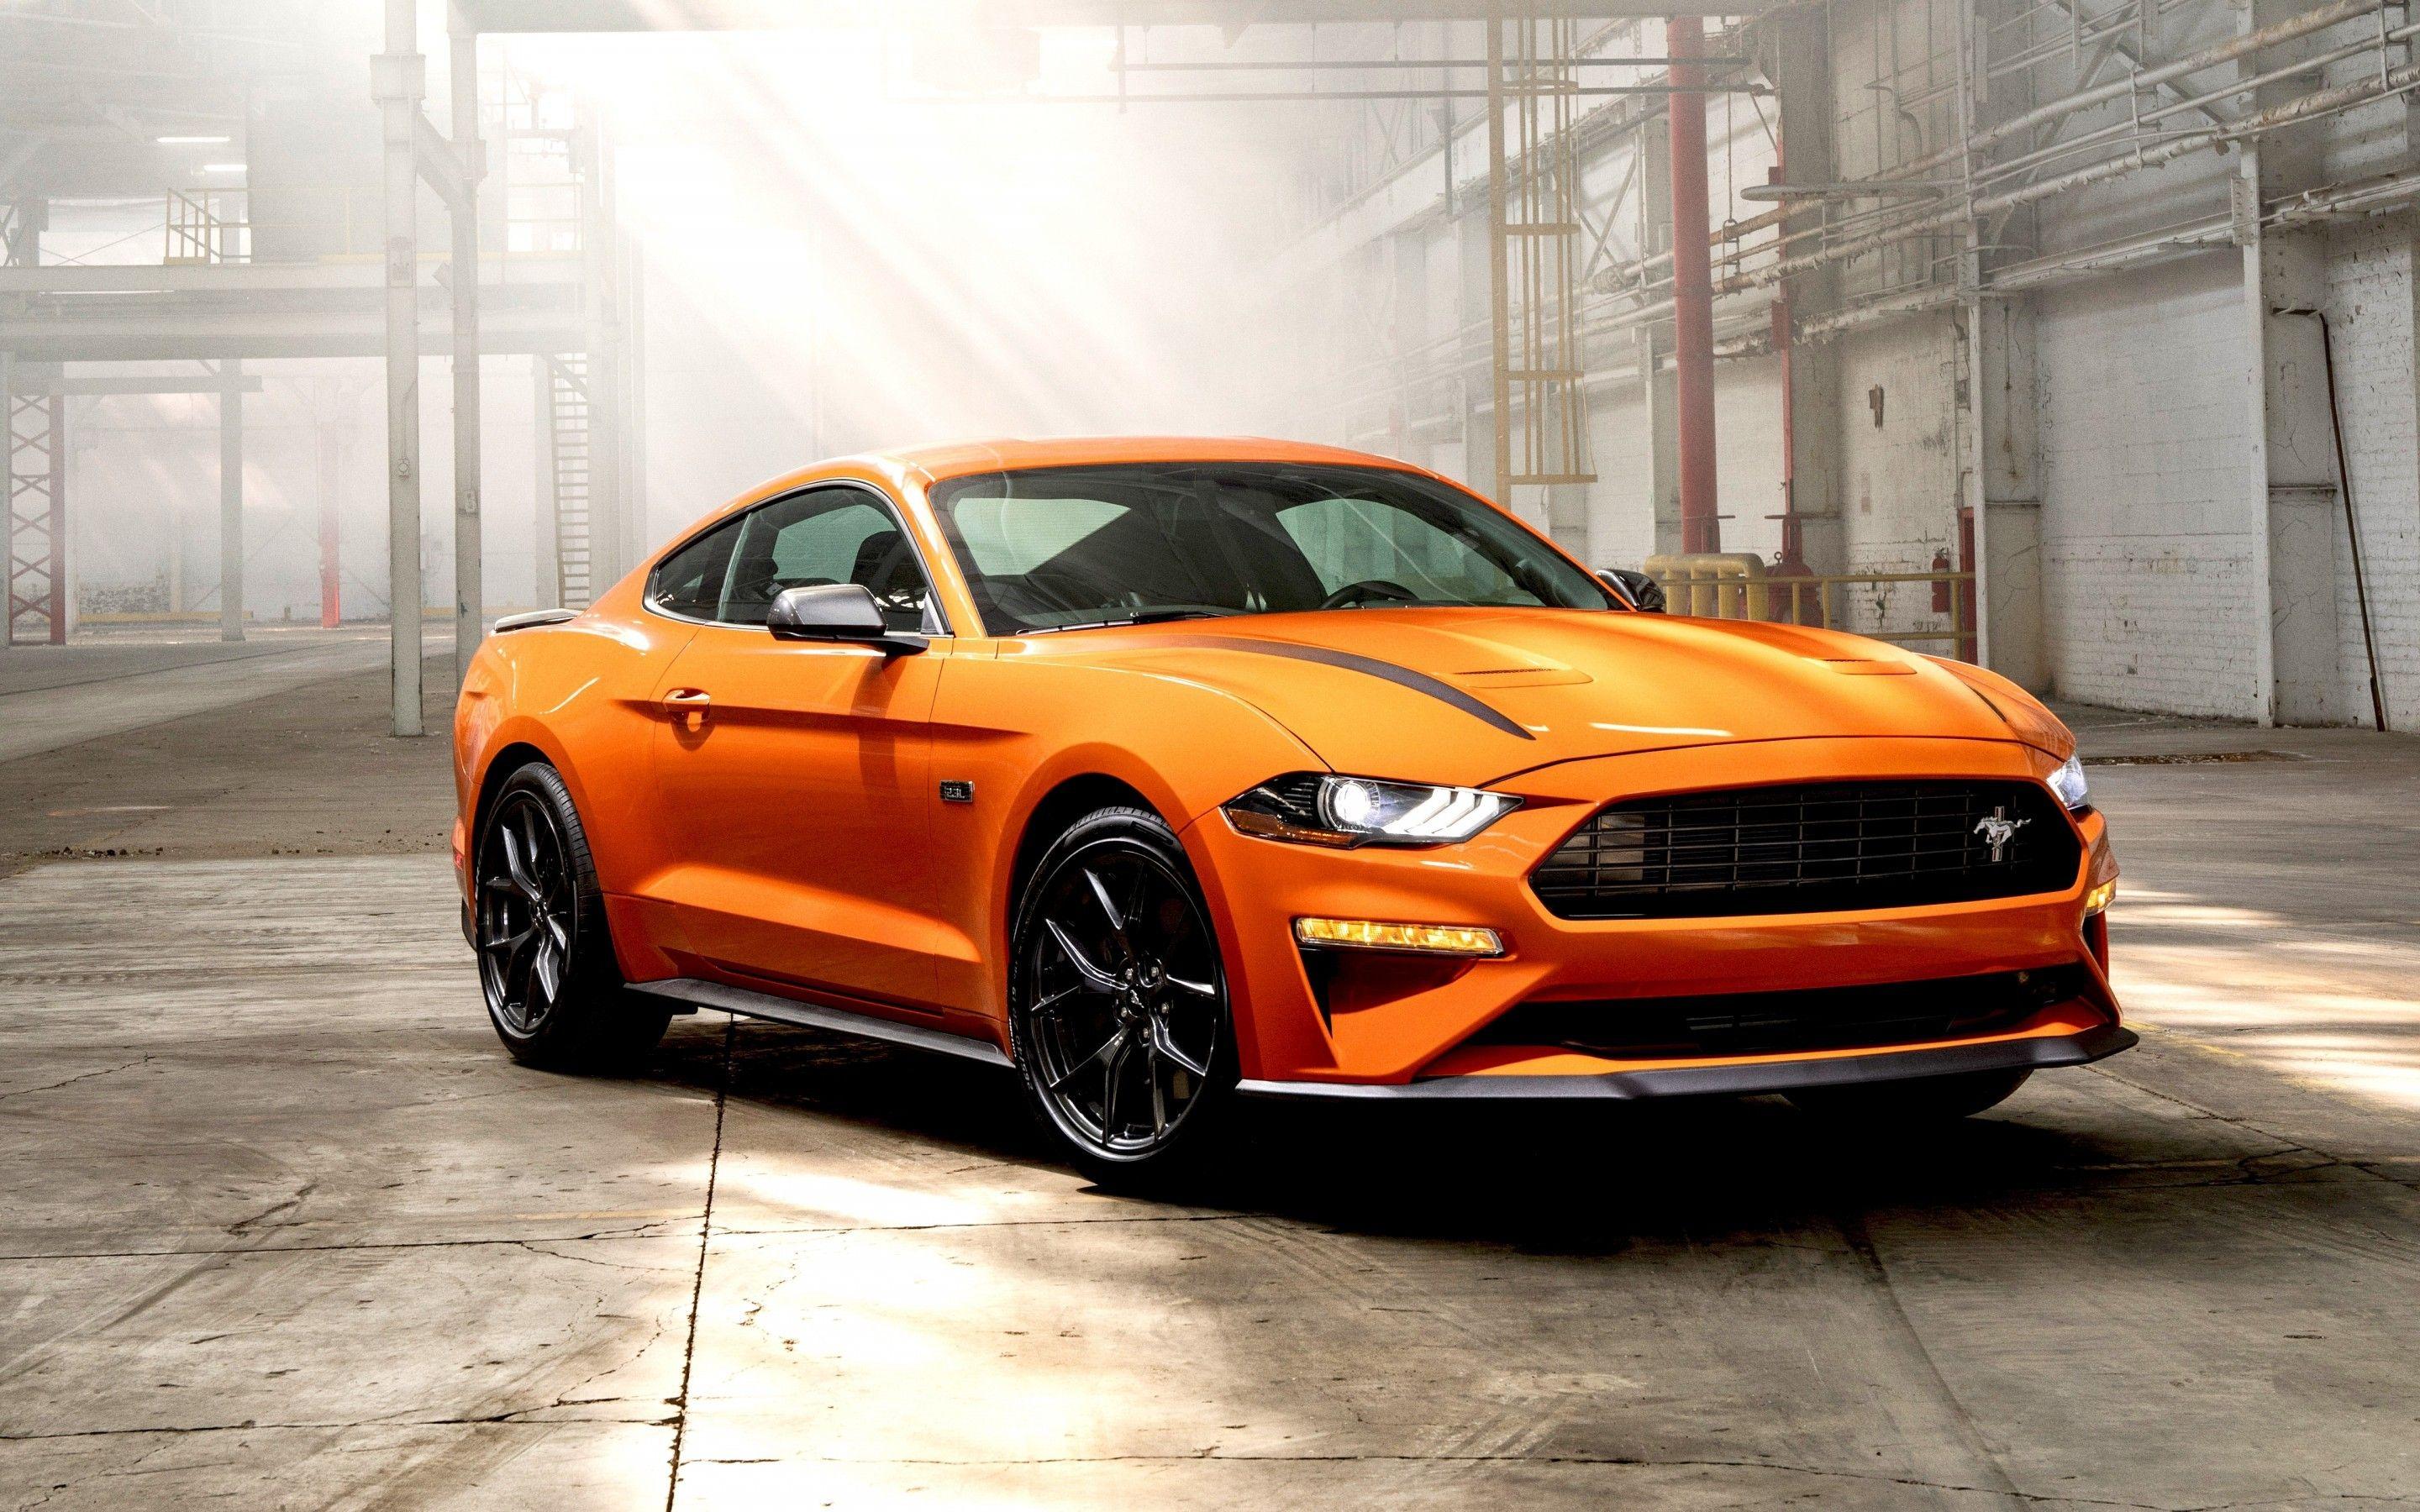 12+ 2015 Ford Mustang 50 Orange And Black Wallpaper free download